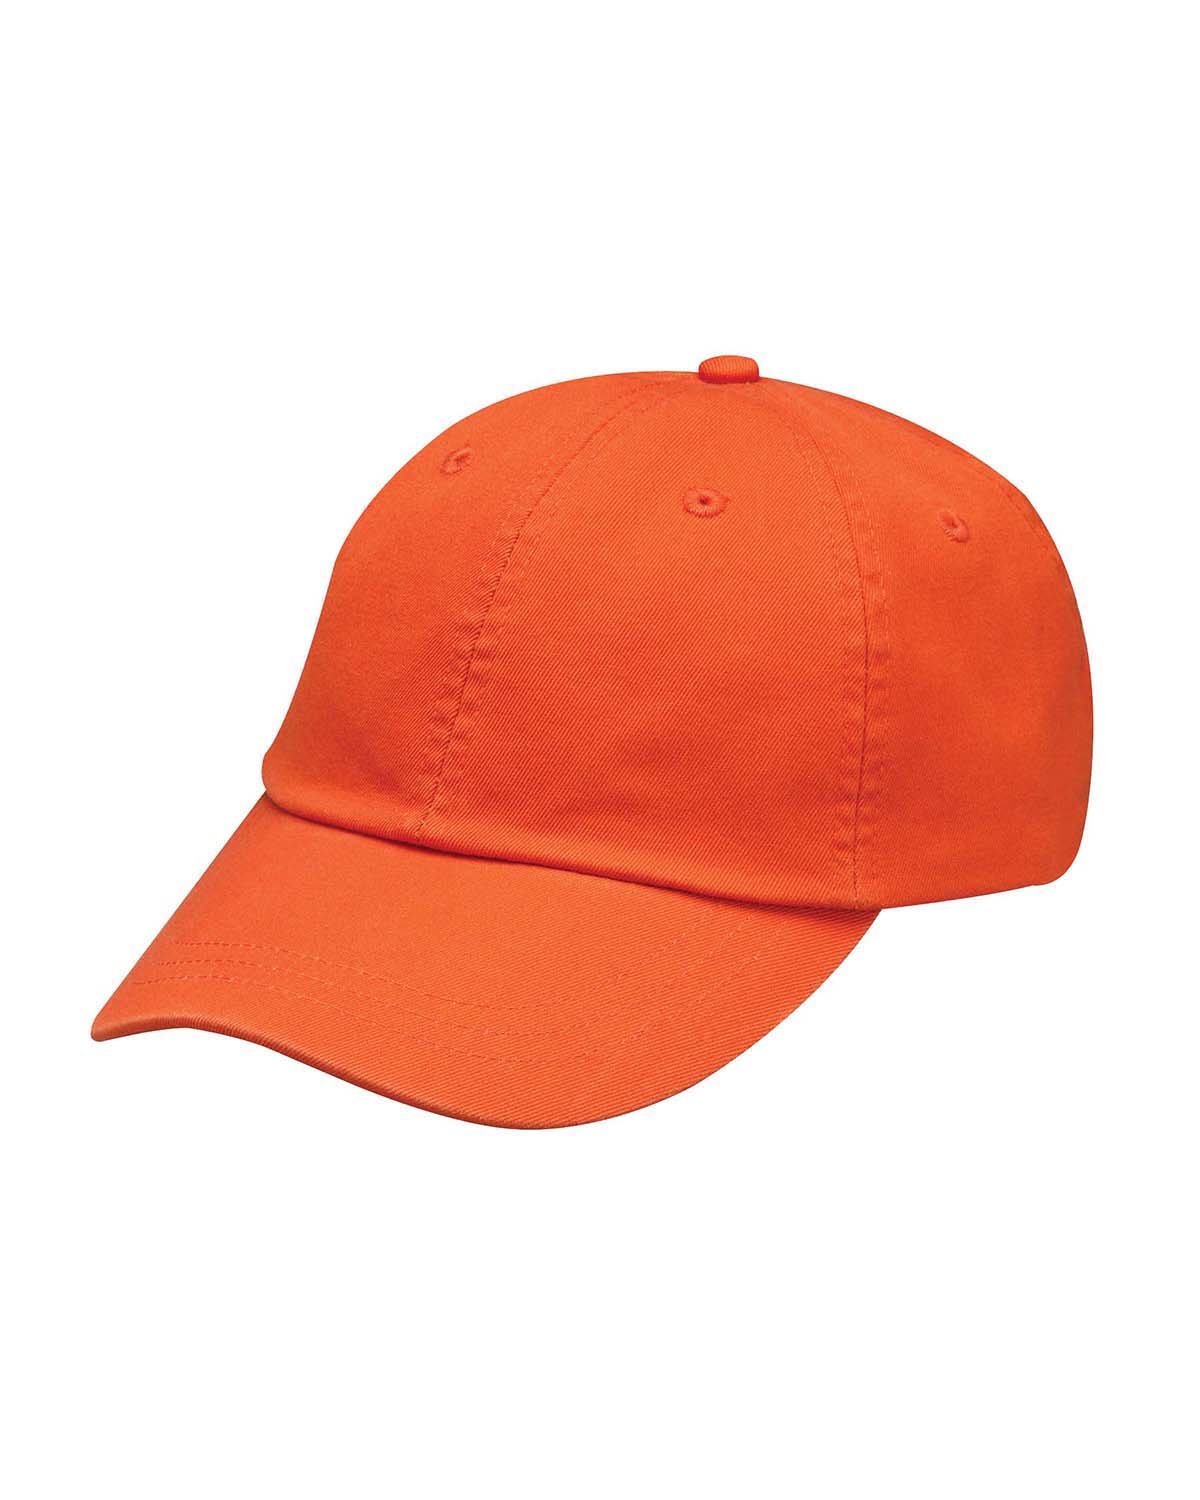 Cotton Cap/Hat by Adams Headwear, Aqua with Orange Logo